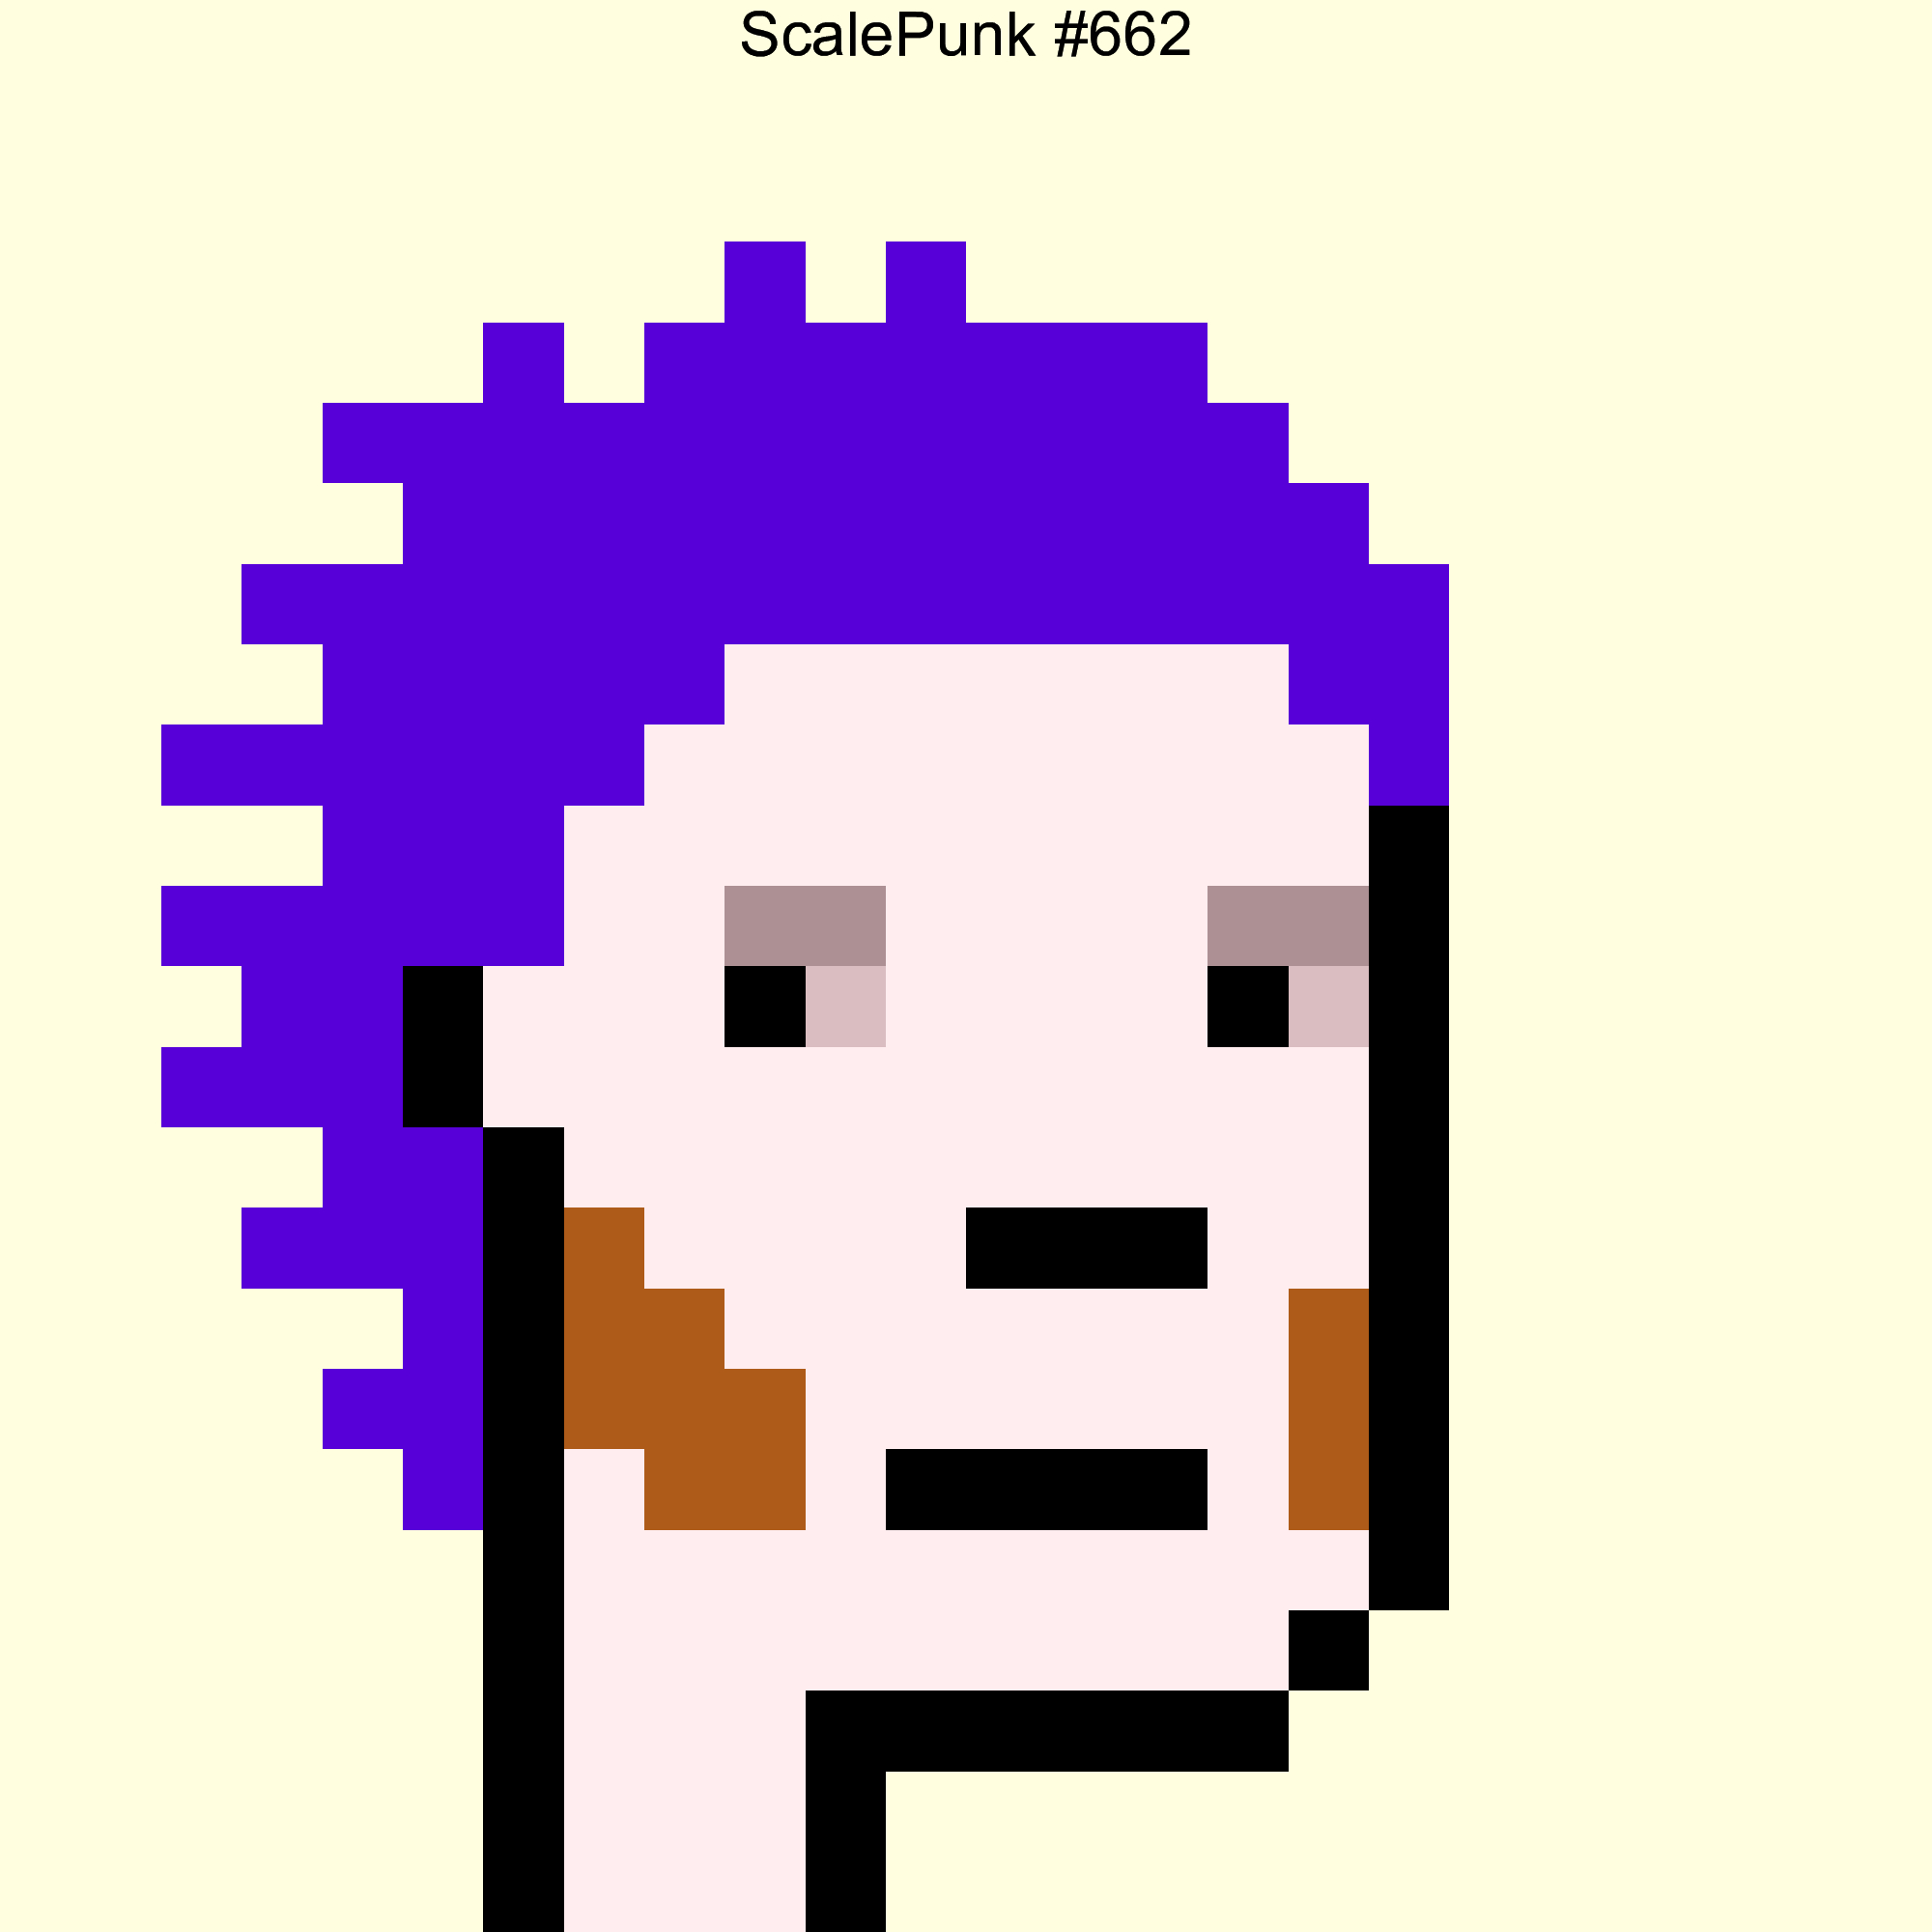 Punk 662